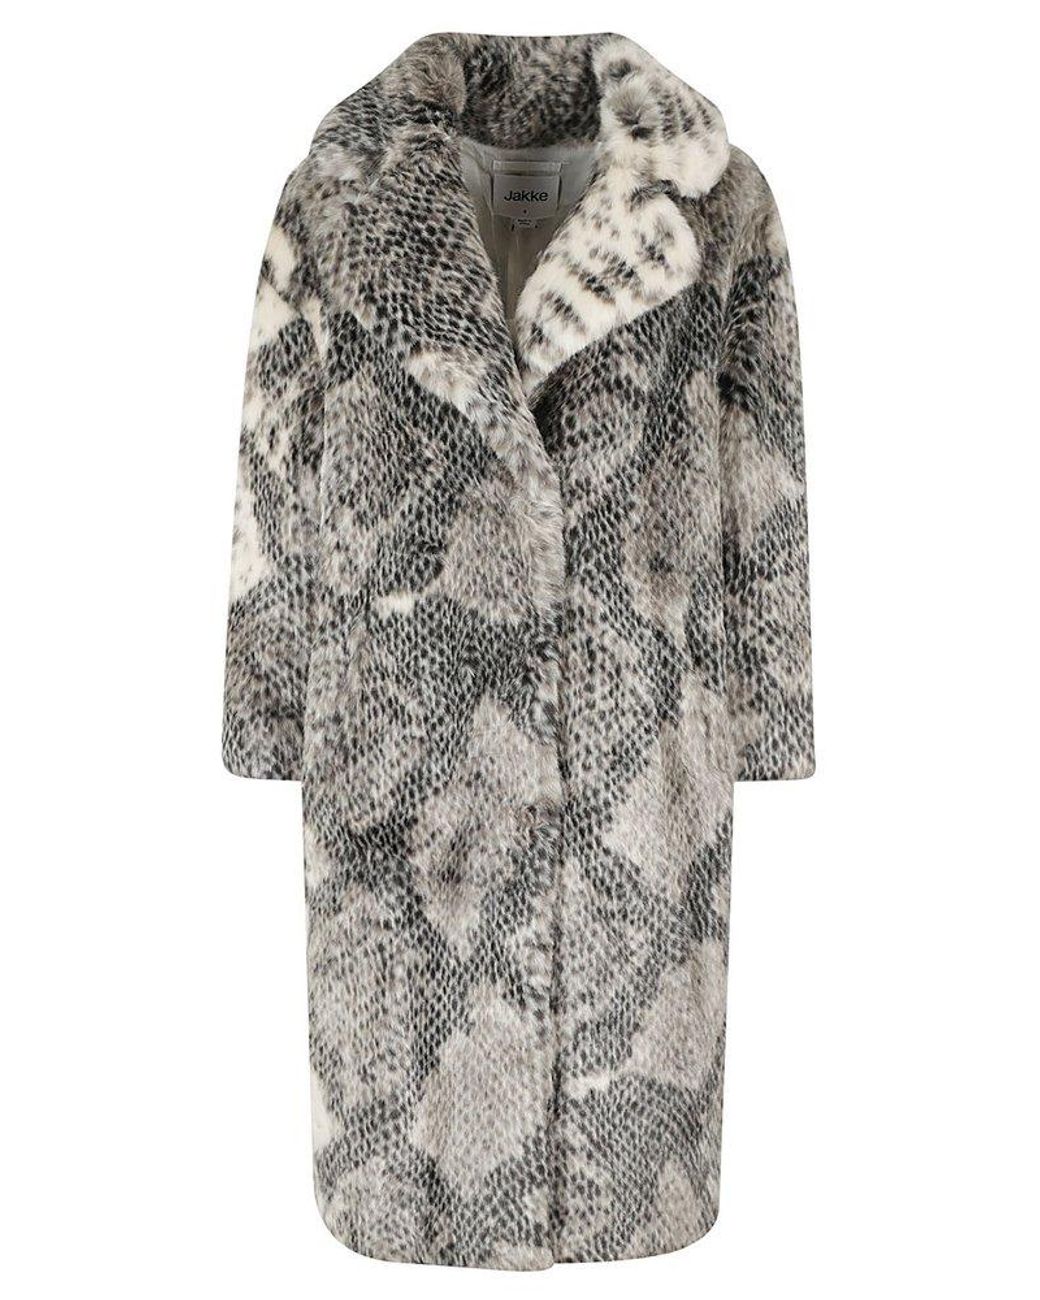 Jakke Rita Boxy Snakeskin Printed Coat in Gray | Lyst